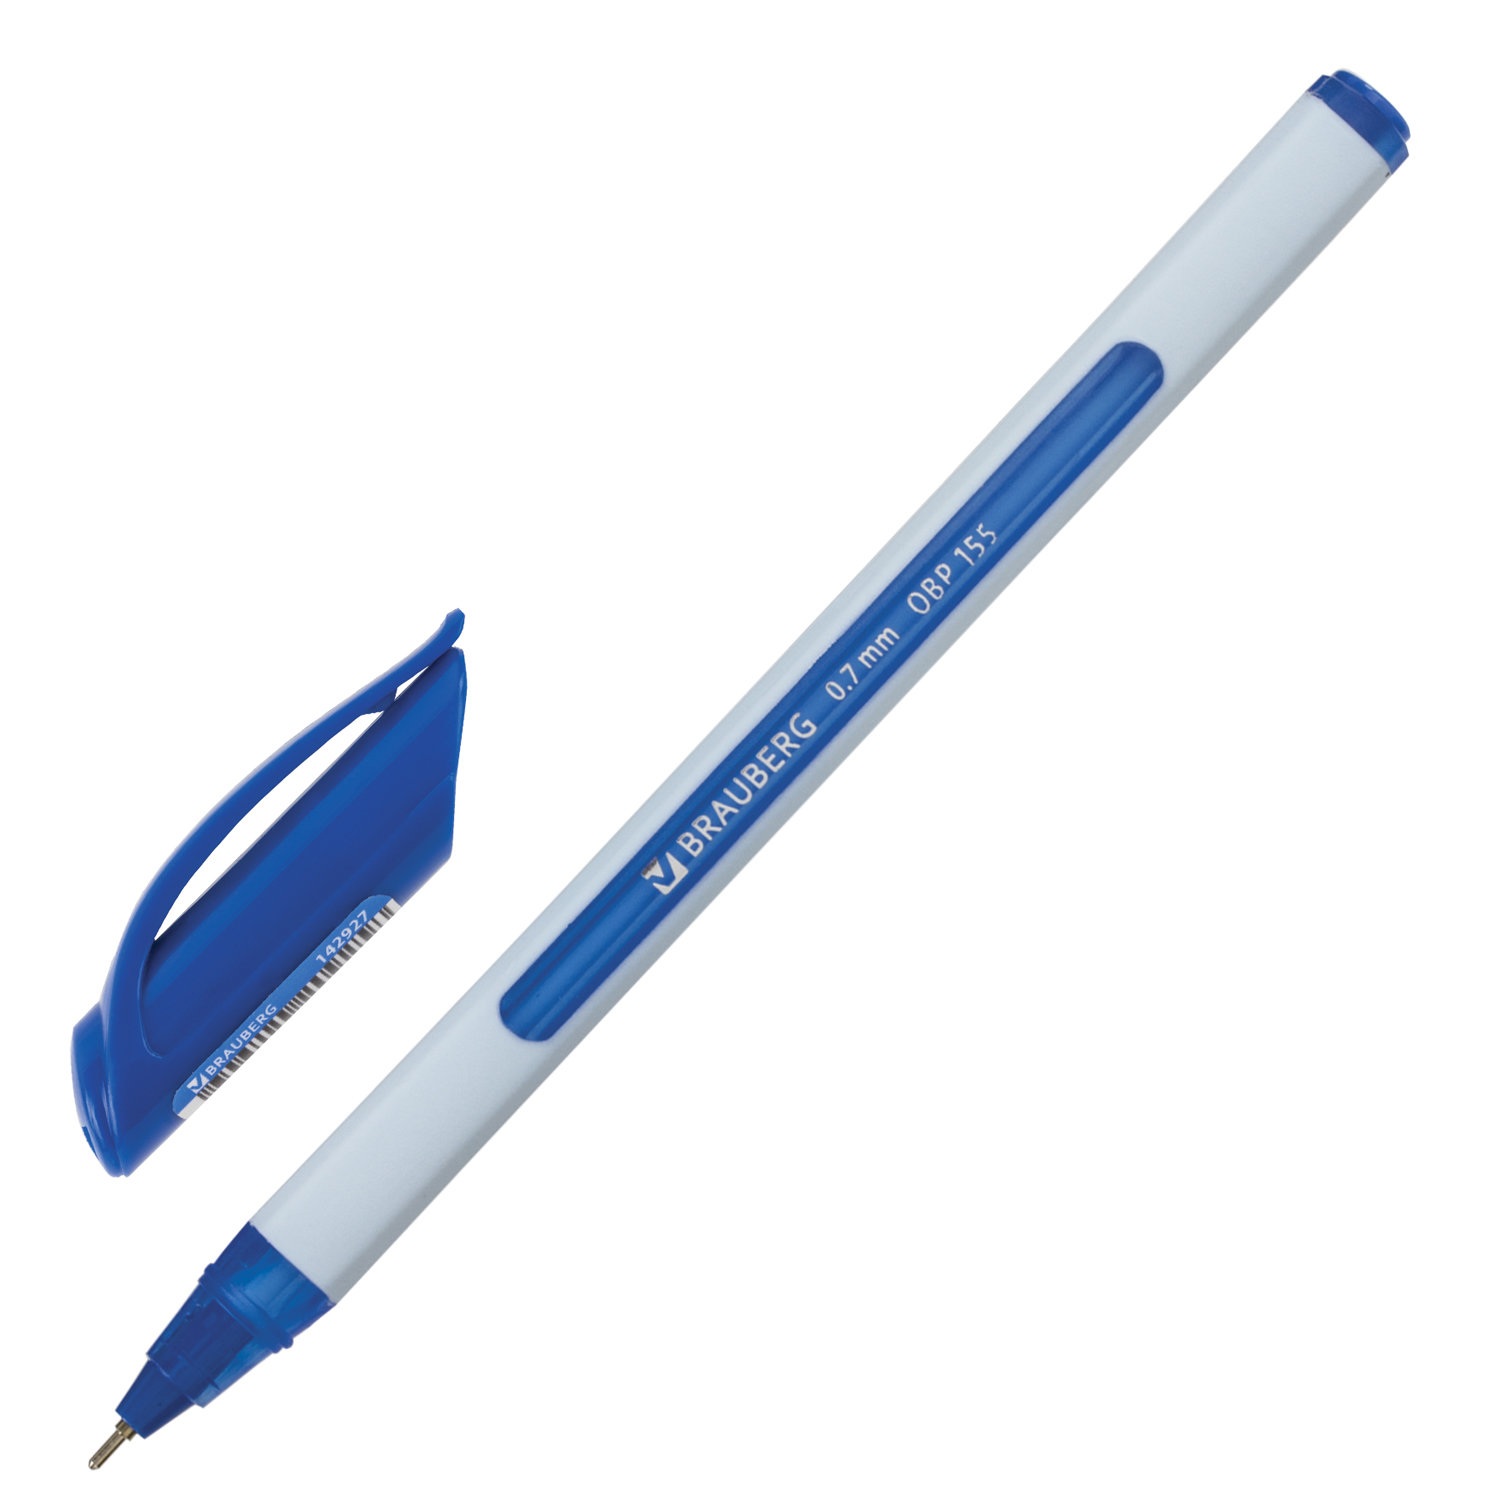 Brauberg 0.7. Ручка БРАУБЕРГ 0.7. Ручка шариковая масляная BRAUBERG Extra Glide Soft White, синяя, 0,7мм, линия 0,35мм, 142927. Ручка шариковая БРАУБЕРГ. Ручка шариковая синяя БРАУБЕРГ.